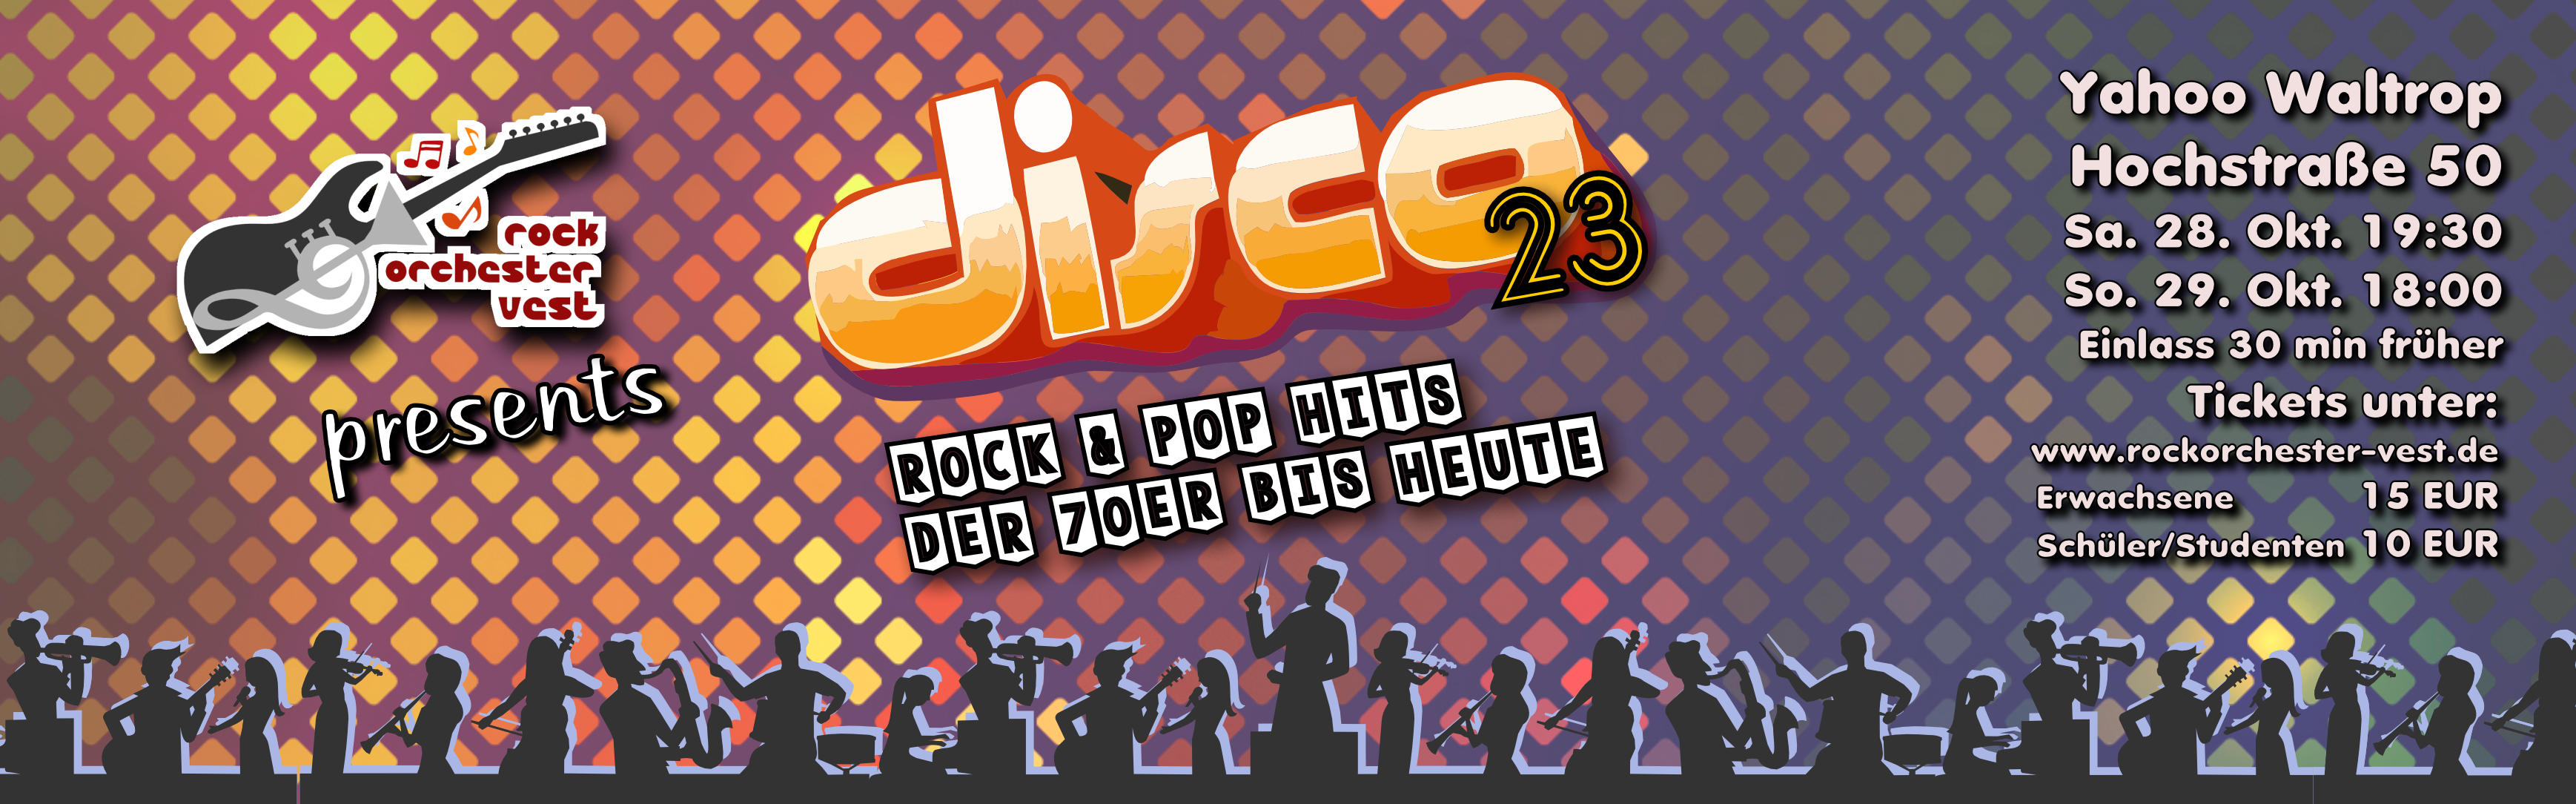 disco23_banner_ticket_big